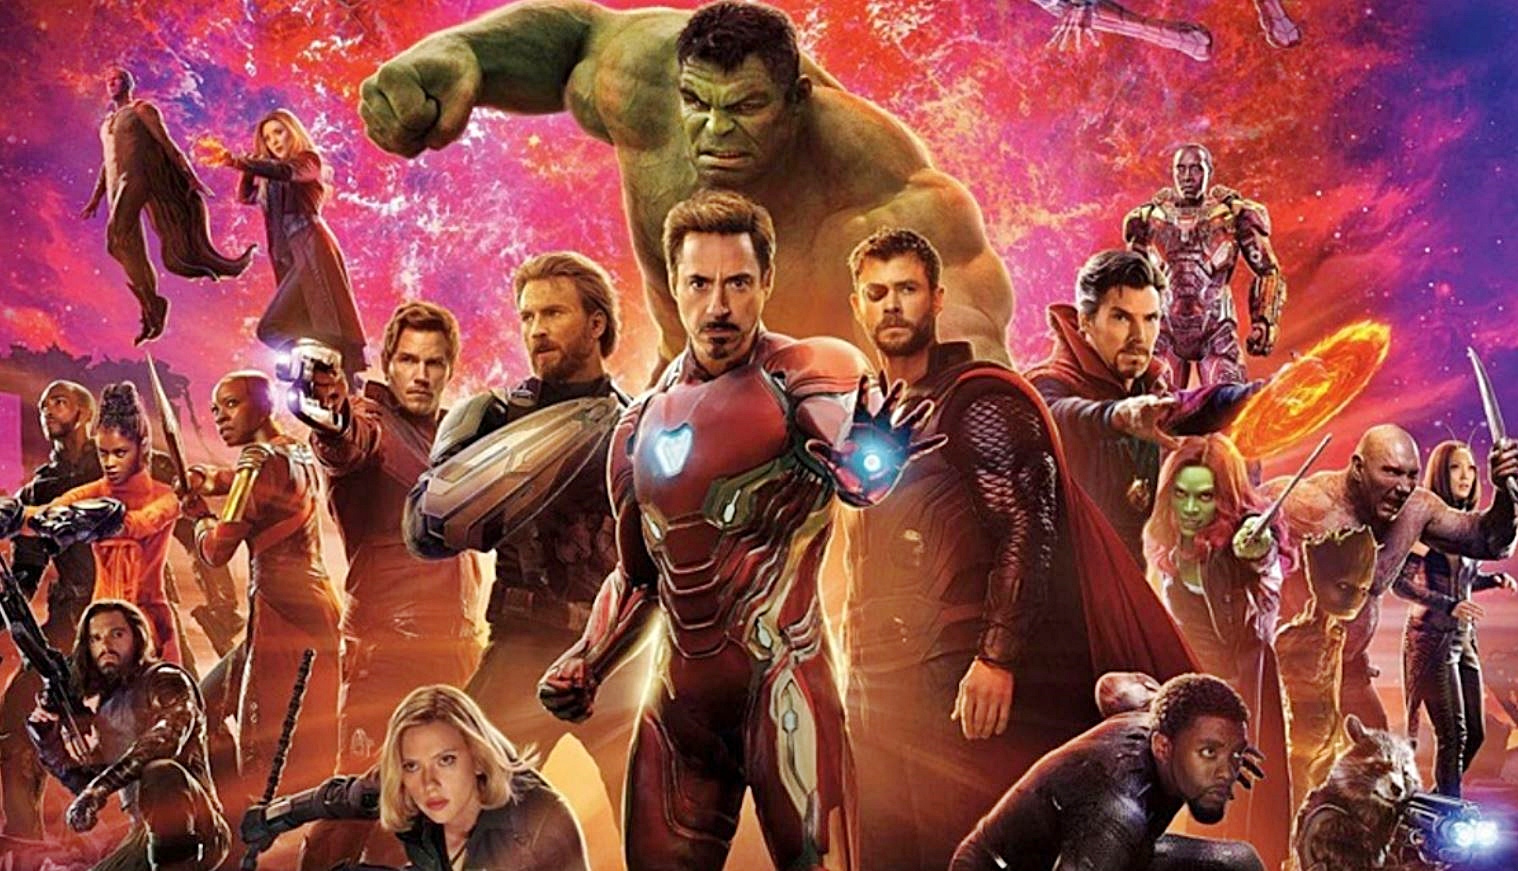  Gambar  Promosi Filem Avengers  Endgame Memperlihatkan 